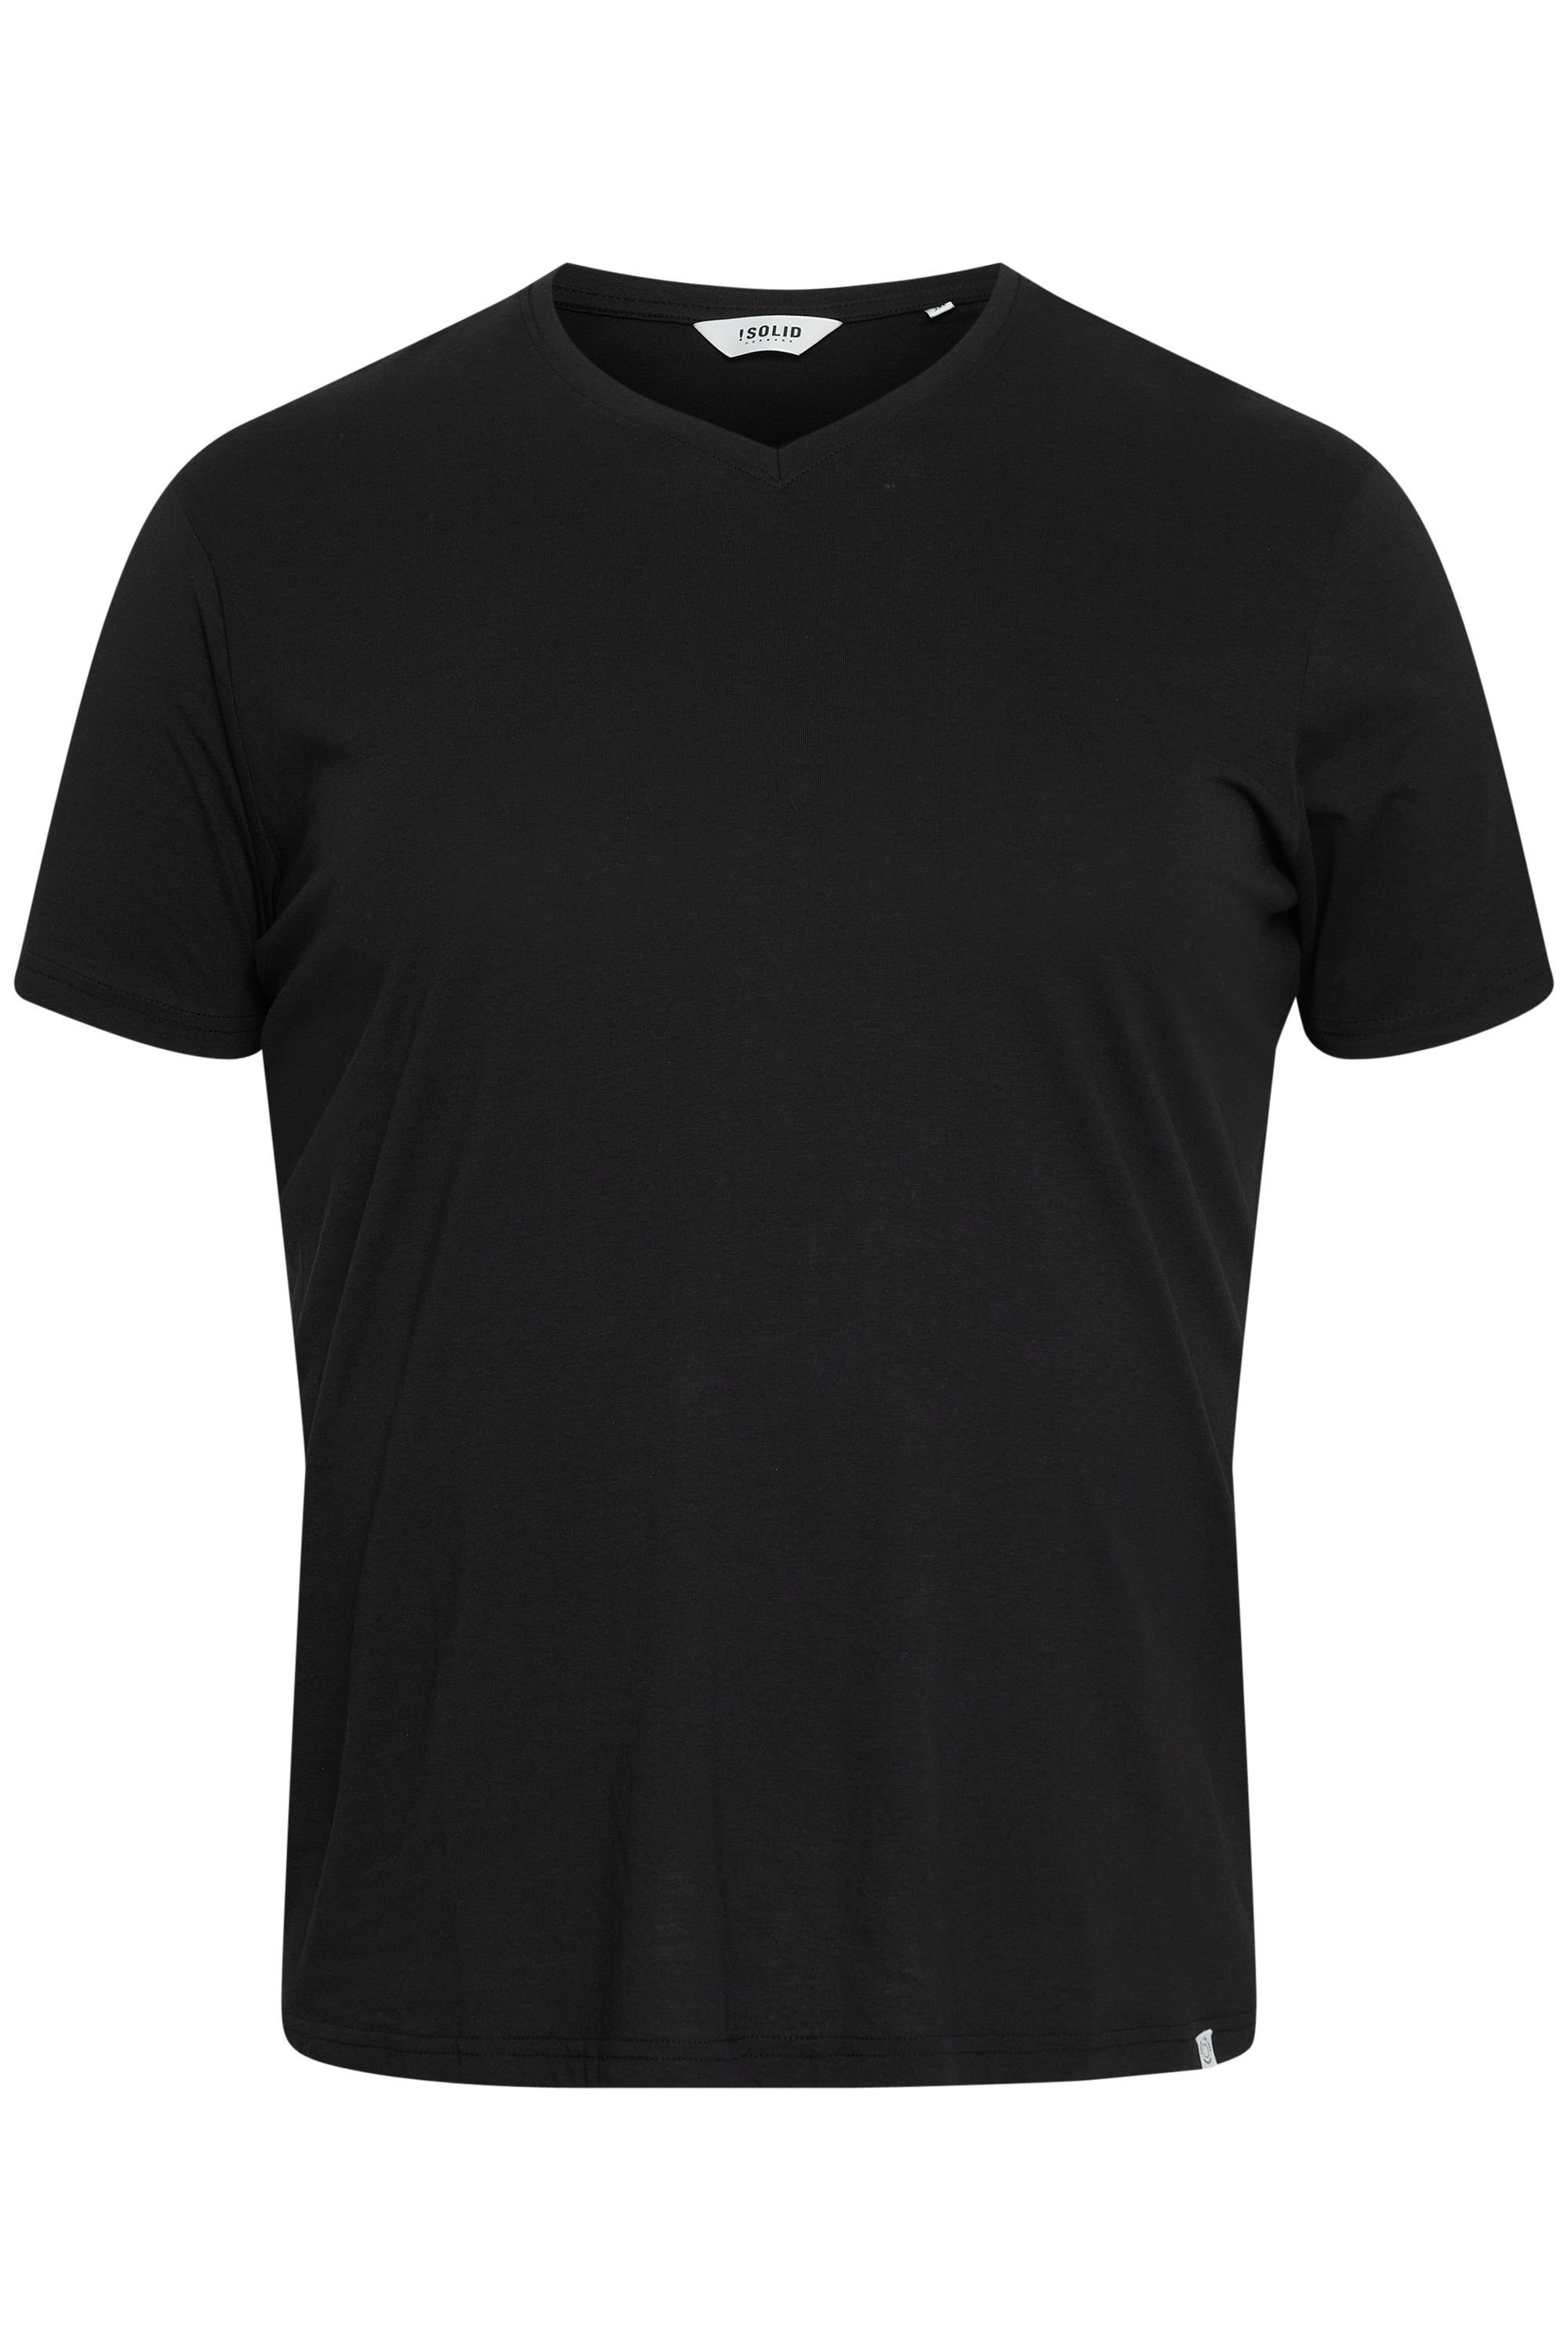 (194007) Black SDBedo T-Shirt BT !Solid